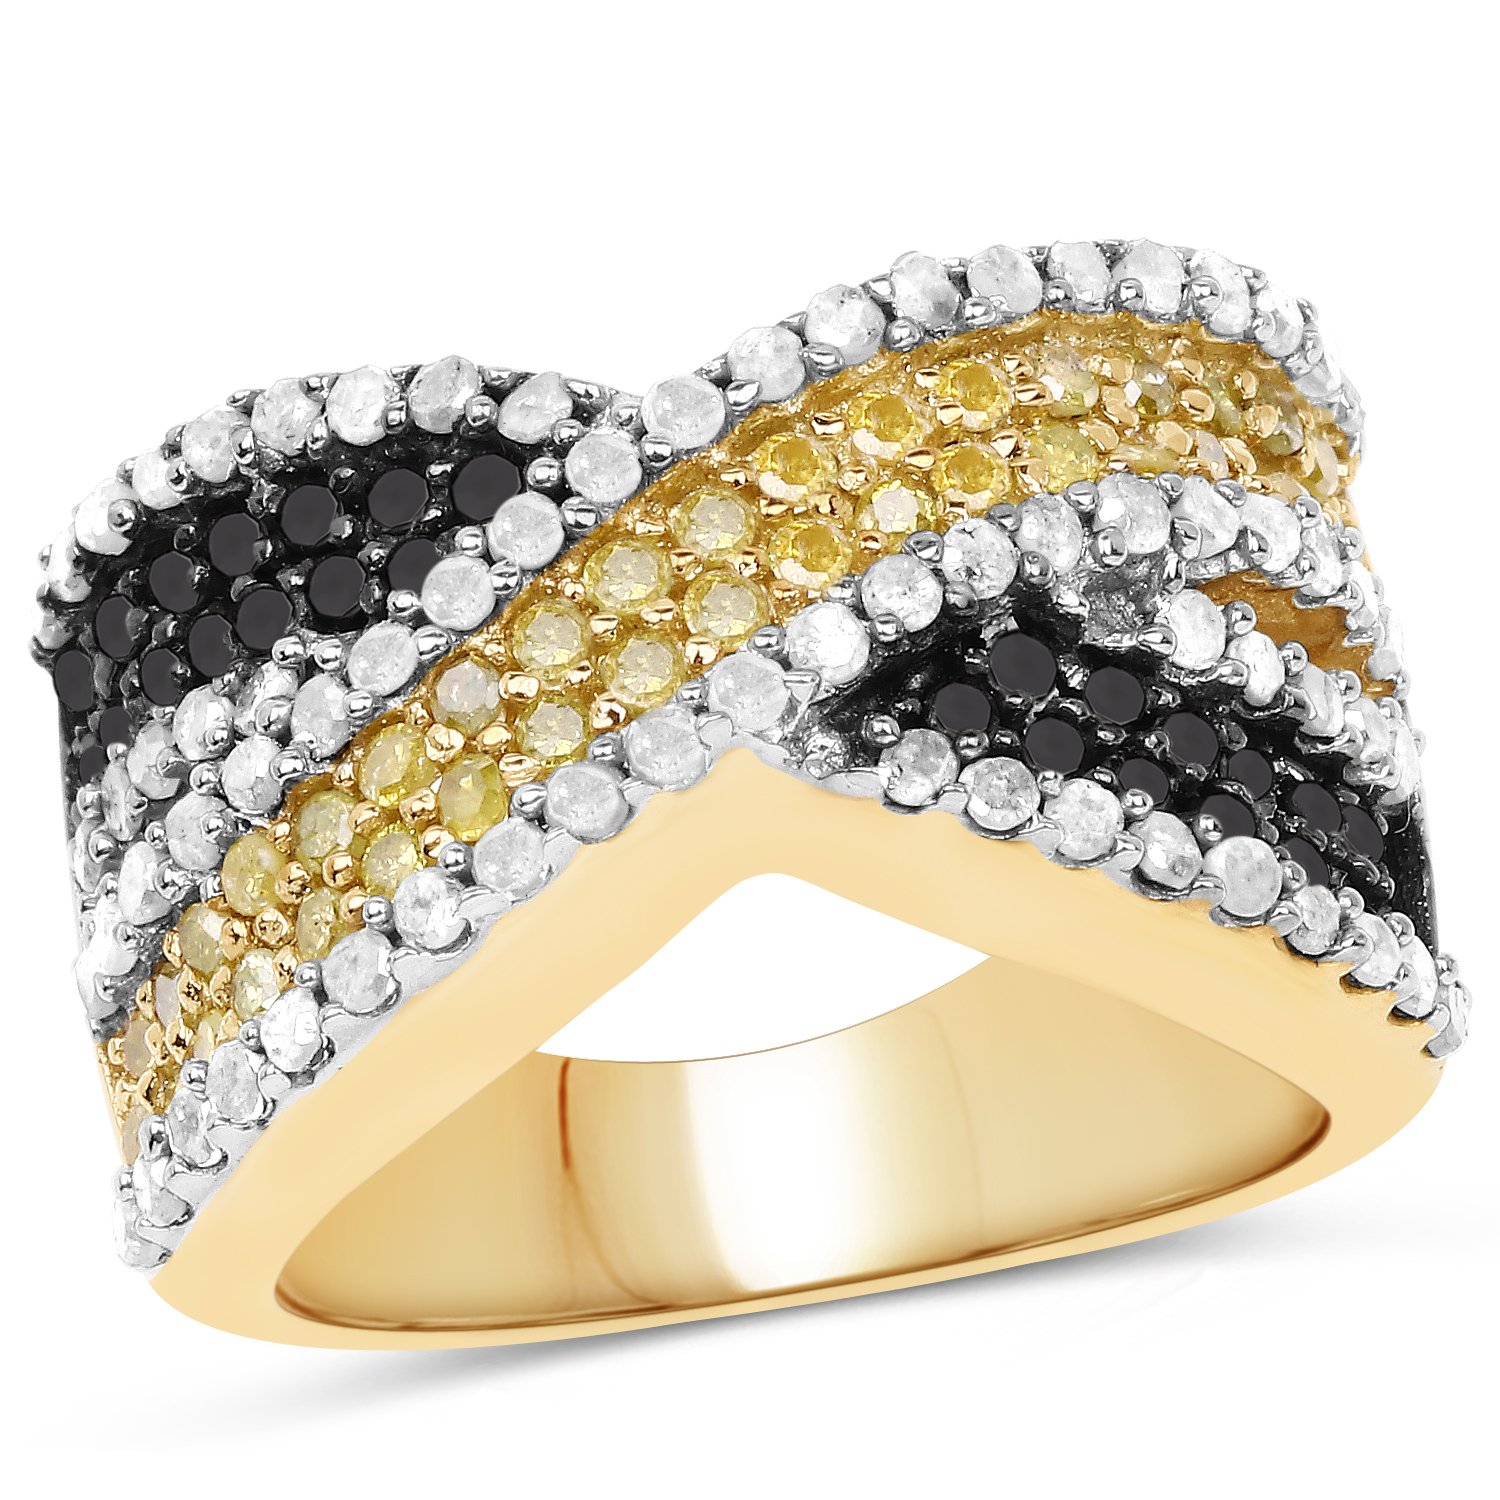 14K Yellow Gold Plated 1.58 Carat Genuine Black Diamond, White Diamond and Yellow Diamond .925 Sterling Silver Ring